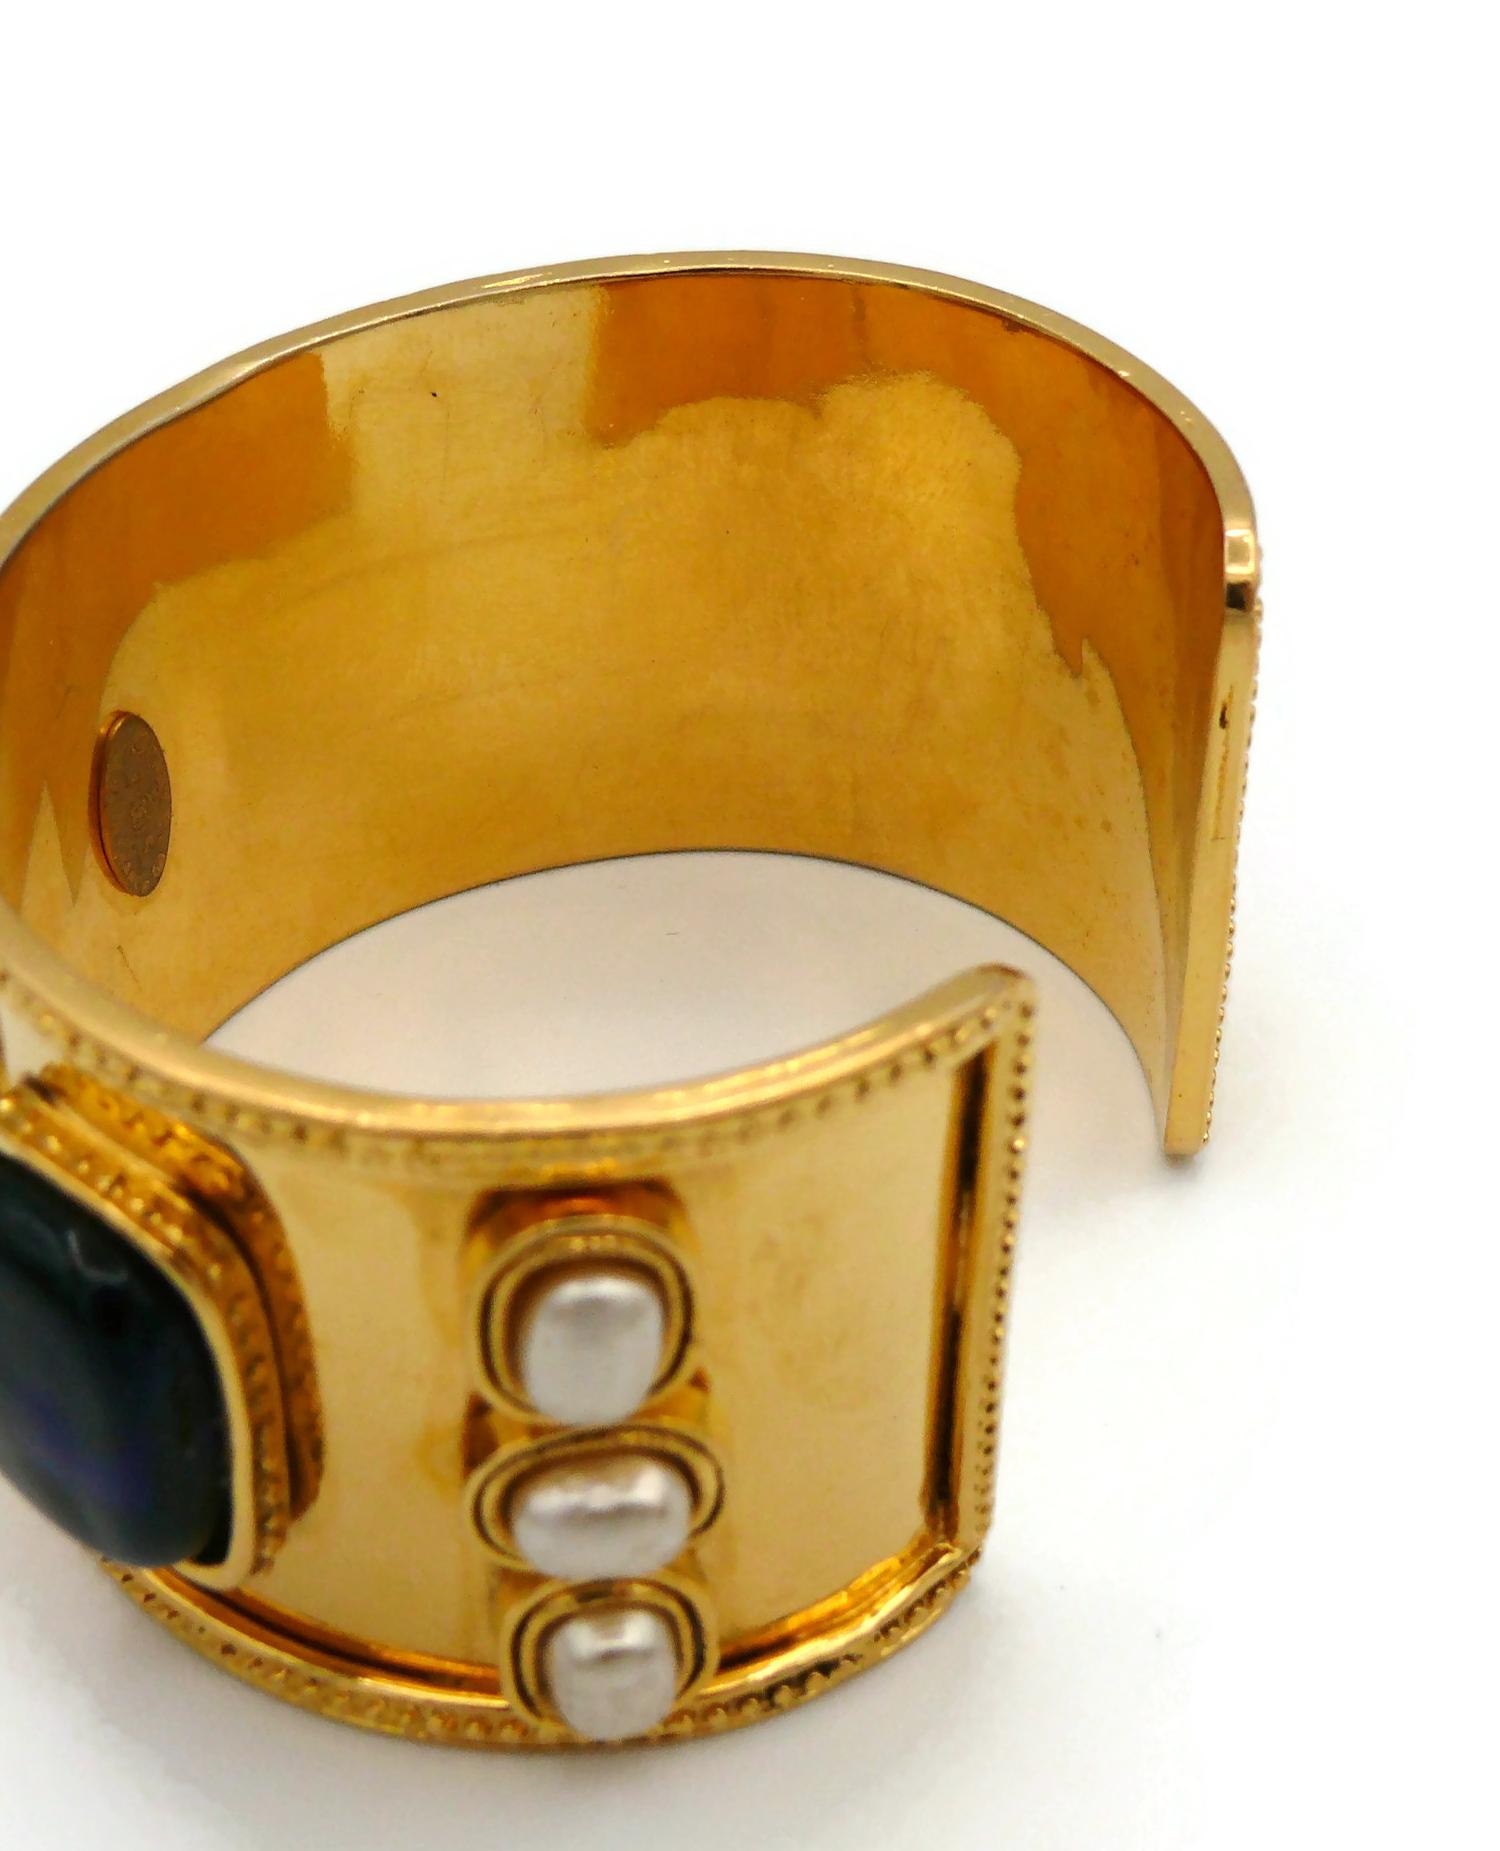 CHANEL Vintage Byzantine Inspired Gripoix Cuff Bracelet, 1990 For Sale 12